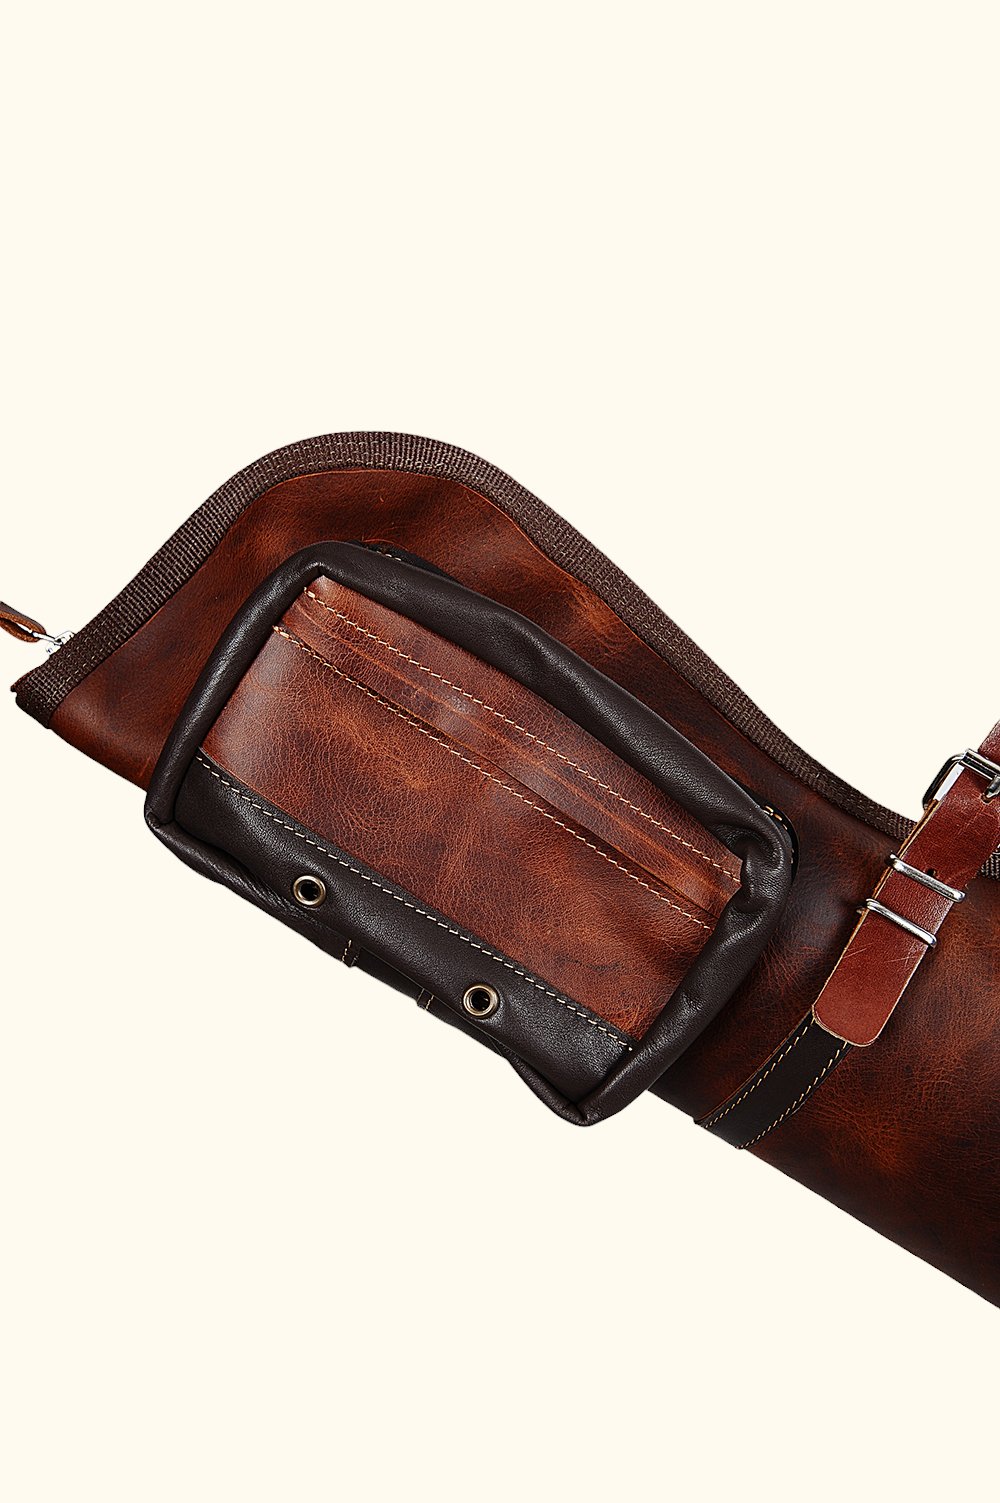 40 inch to 60 inch | Handmade | Leather Rifle Bag | Canvas Rifle Bag | Waxed Canvas  | Leather | Rifle Bag | Hunting | Rifle | Gun case  | Personalization Rifle - Shotgun bag 99percenthandmade   